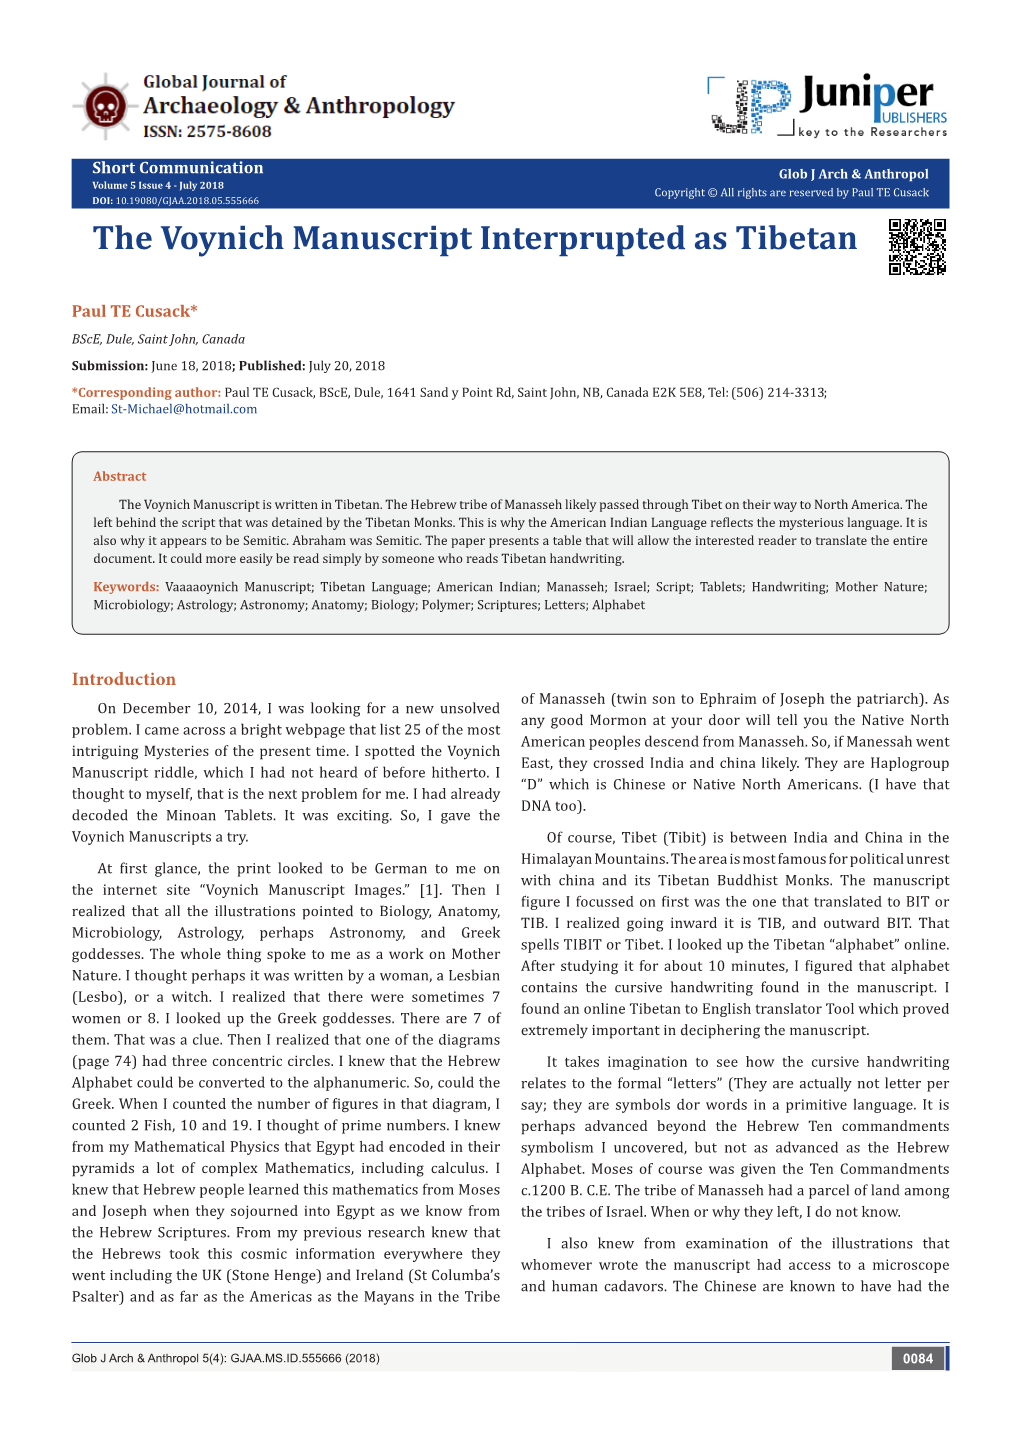 The Voynich Manuscript Interprupted As Tibetan